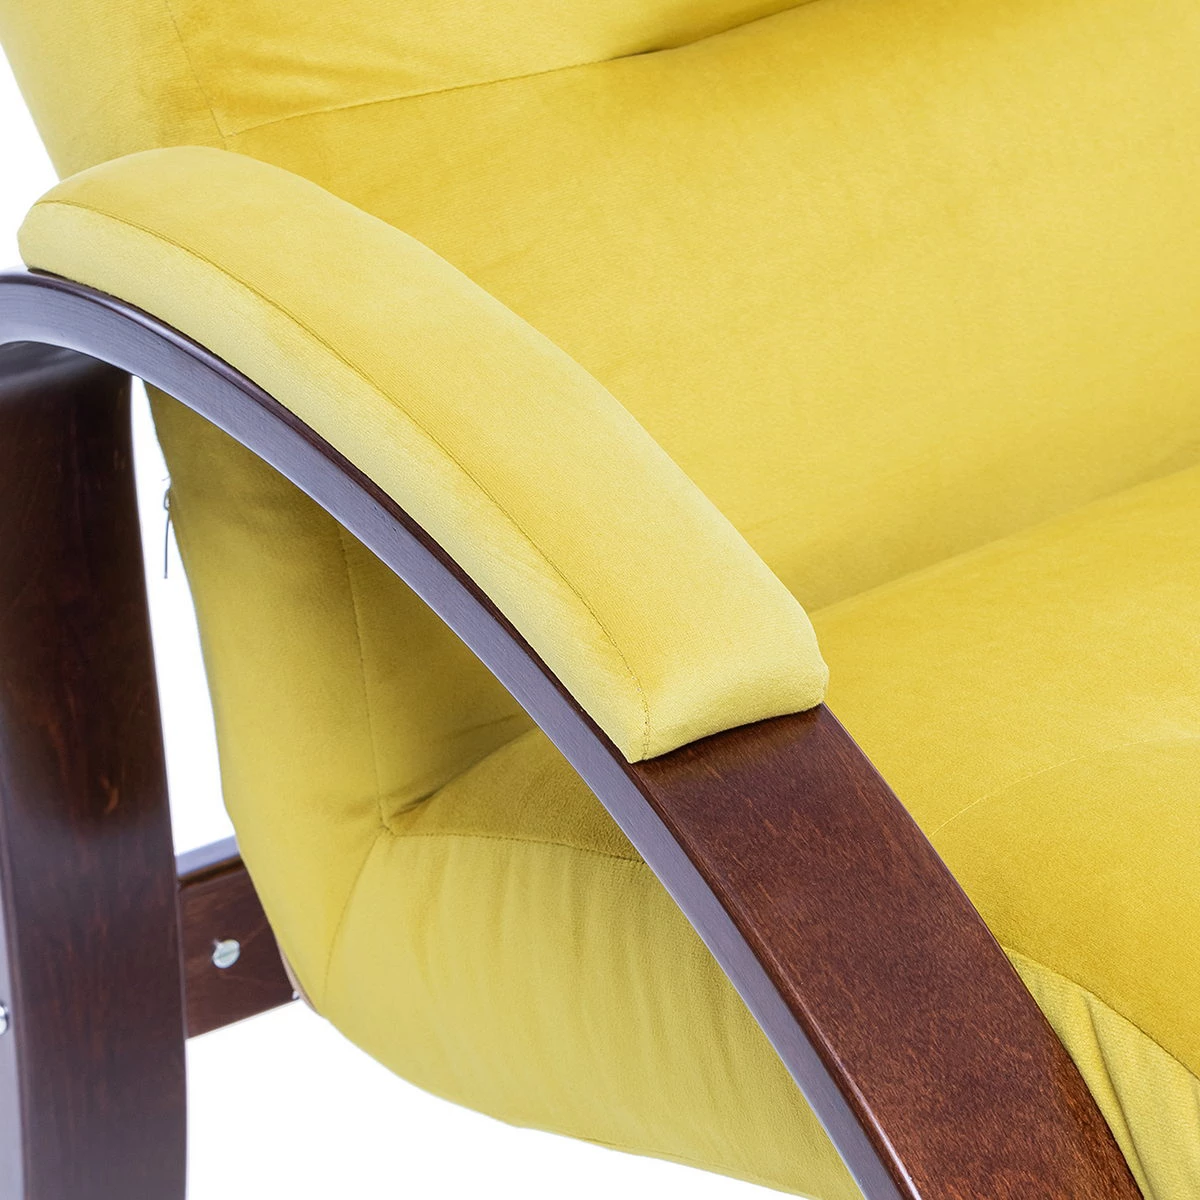 Кресло Leset Лион (Импэкс). Цвет каркаса: Орех текстура; Цвет обивки: V28 желтый